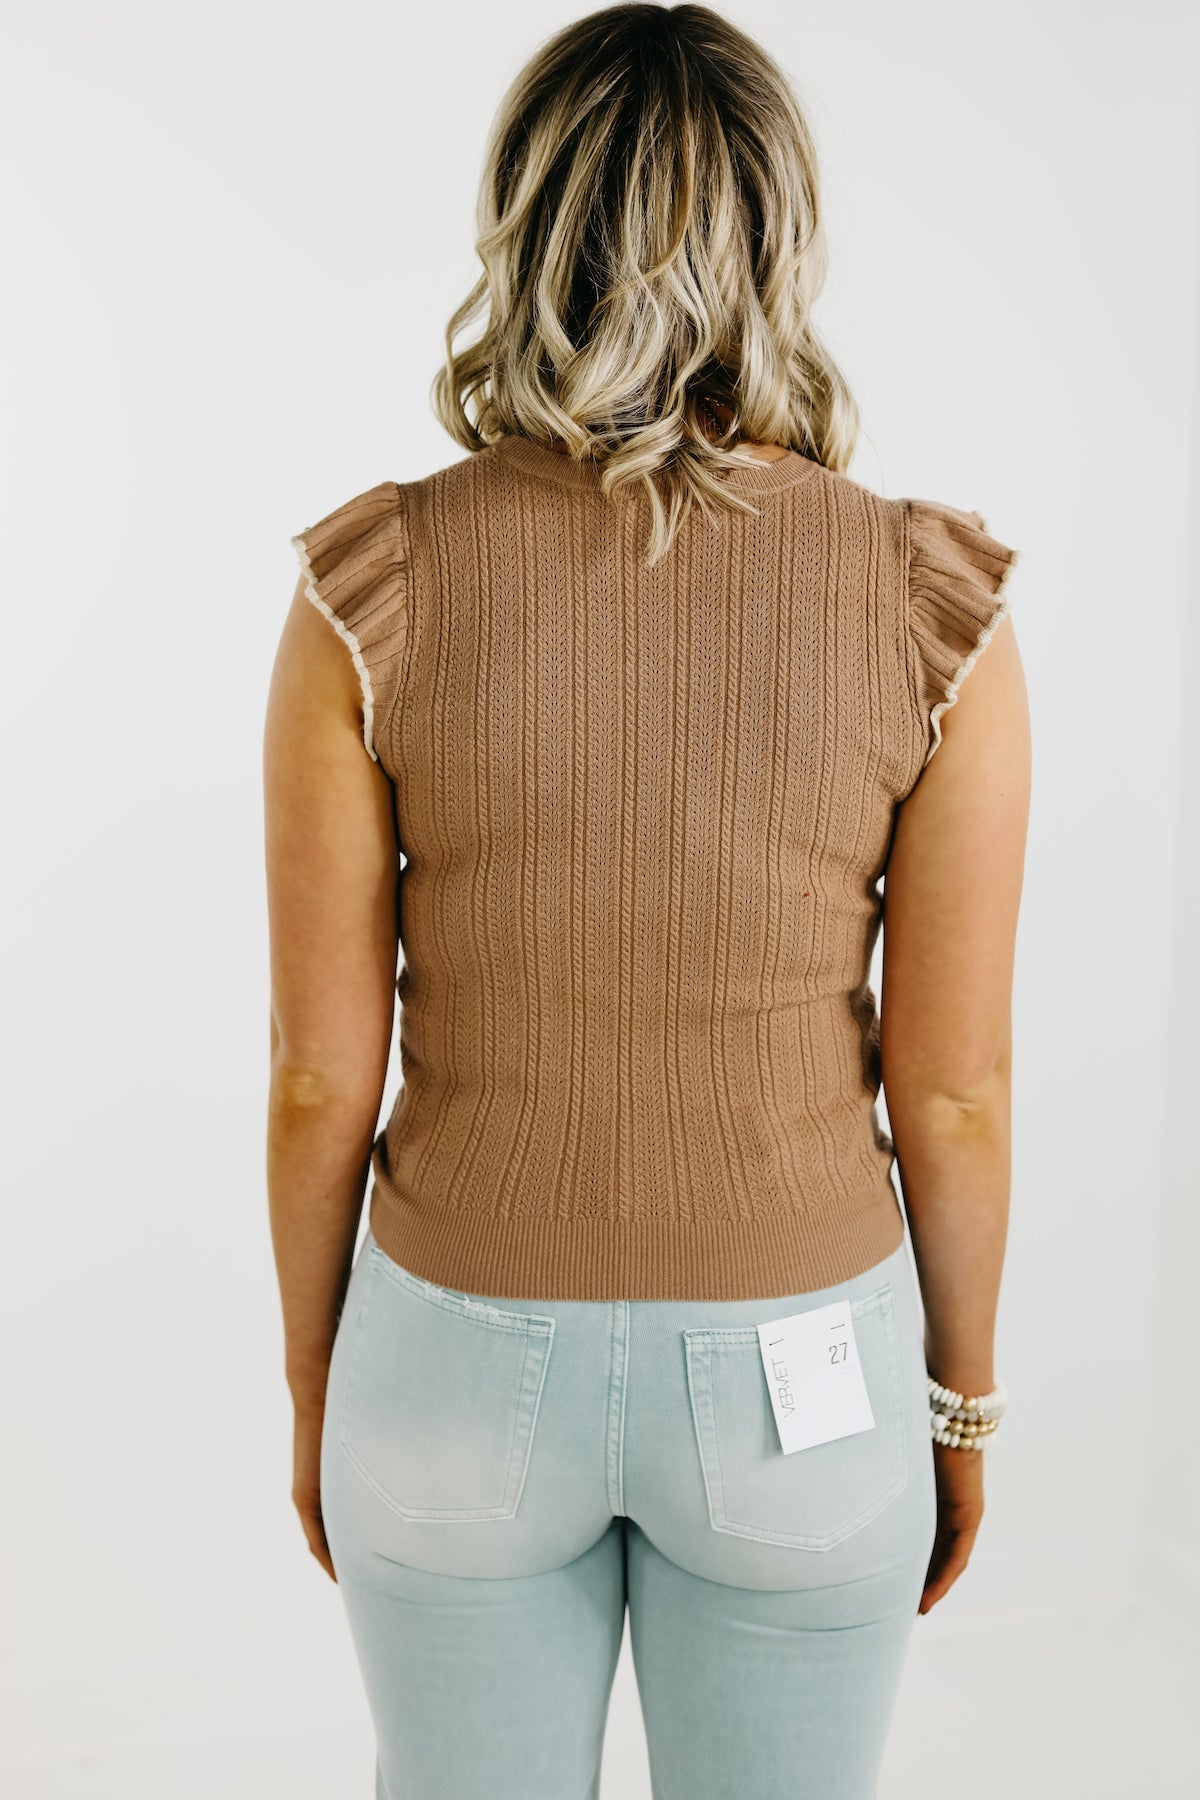 The Ingrid Flutter Sleeve Sweater Top - FINAL SALE